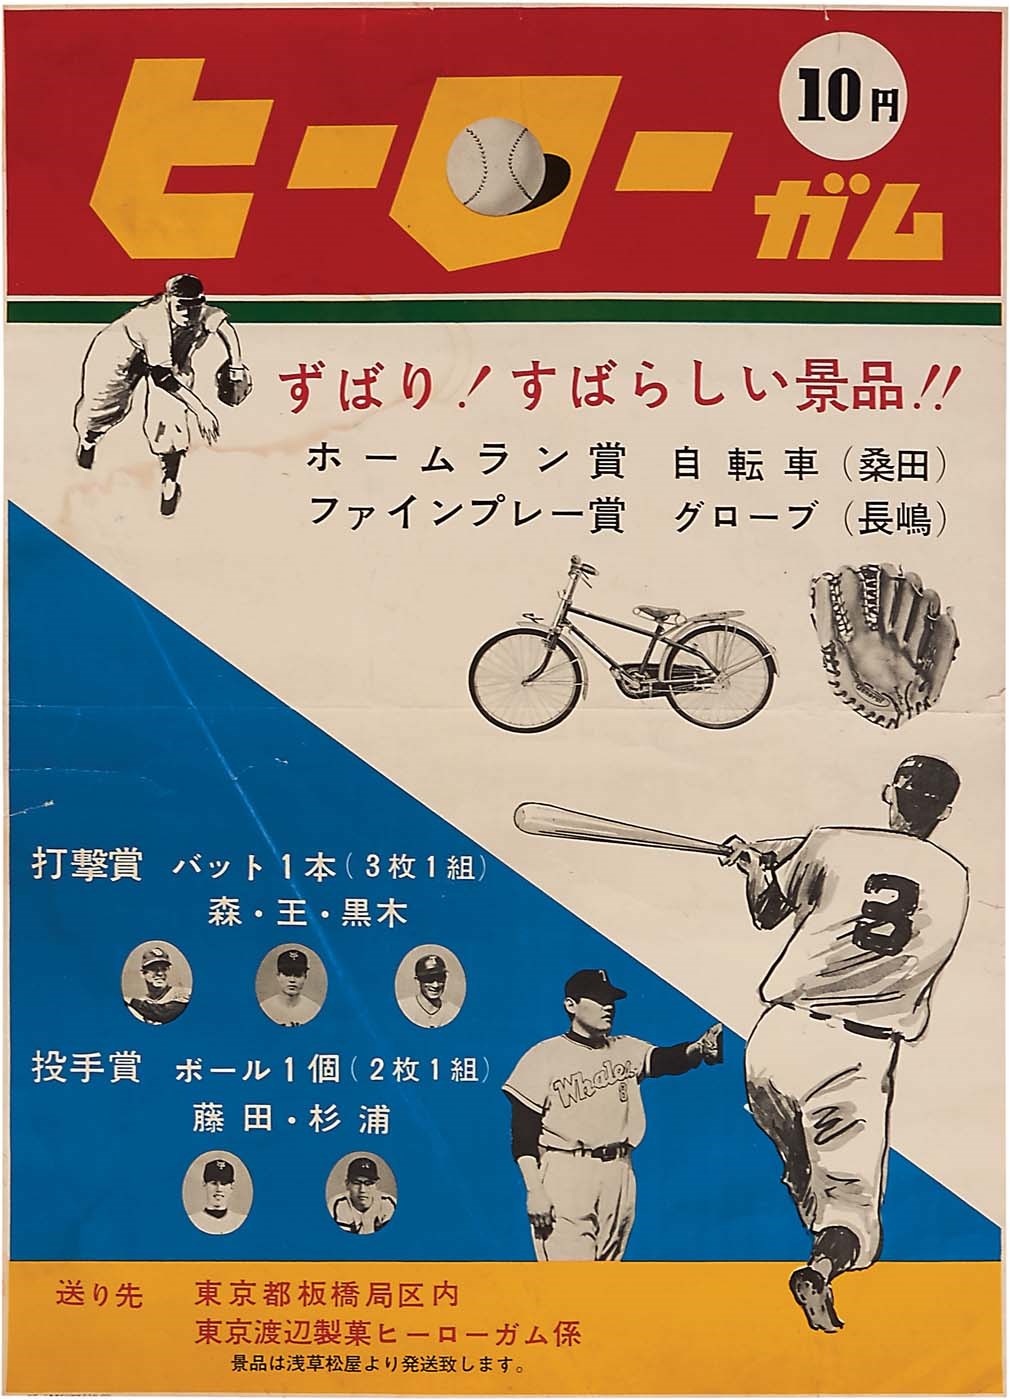 Negro League, Latin, Japanese & International Base - 1960 Sadaharu Oh "Hero Gum" Japanese Baseball Card Advertising Poster